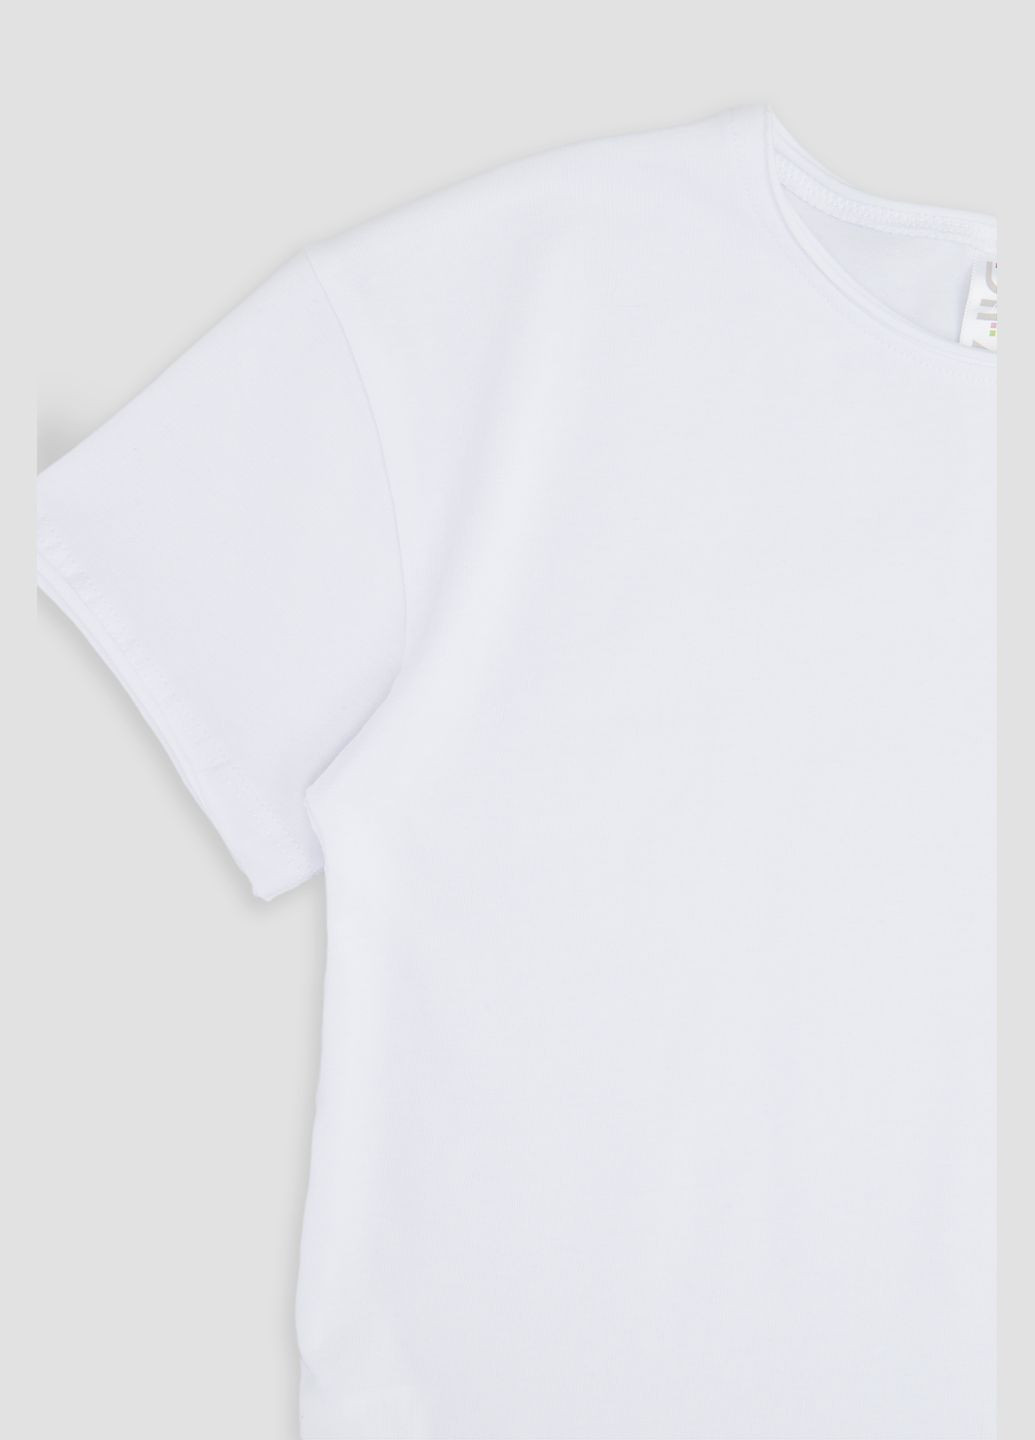 Белая летняя футболка с коротким рукавом для мальчика цвет белый цб-00243590 Difa